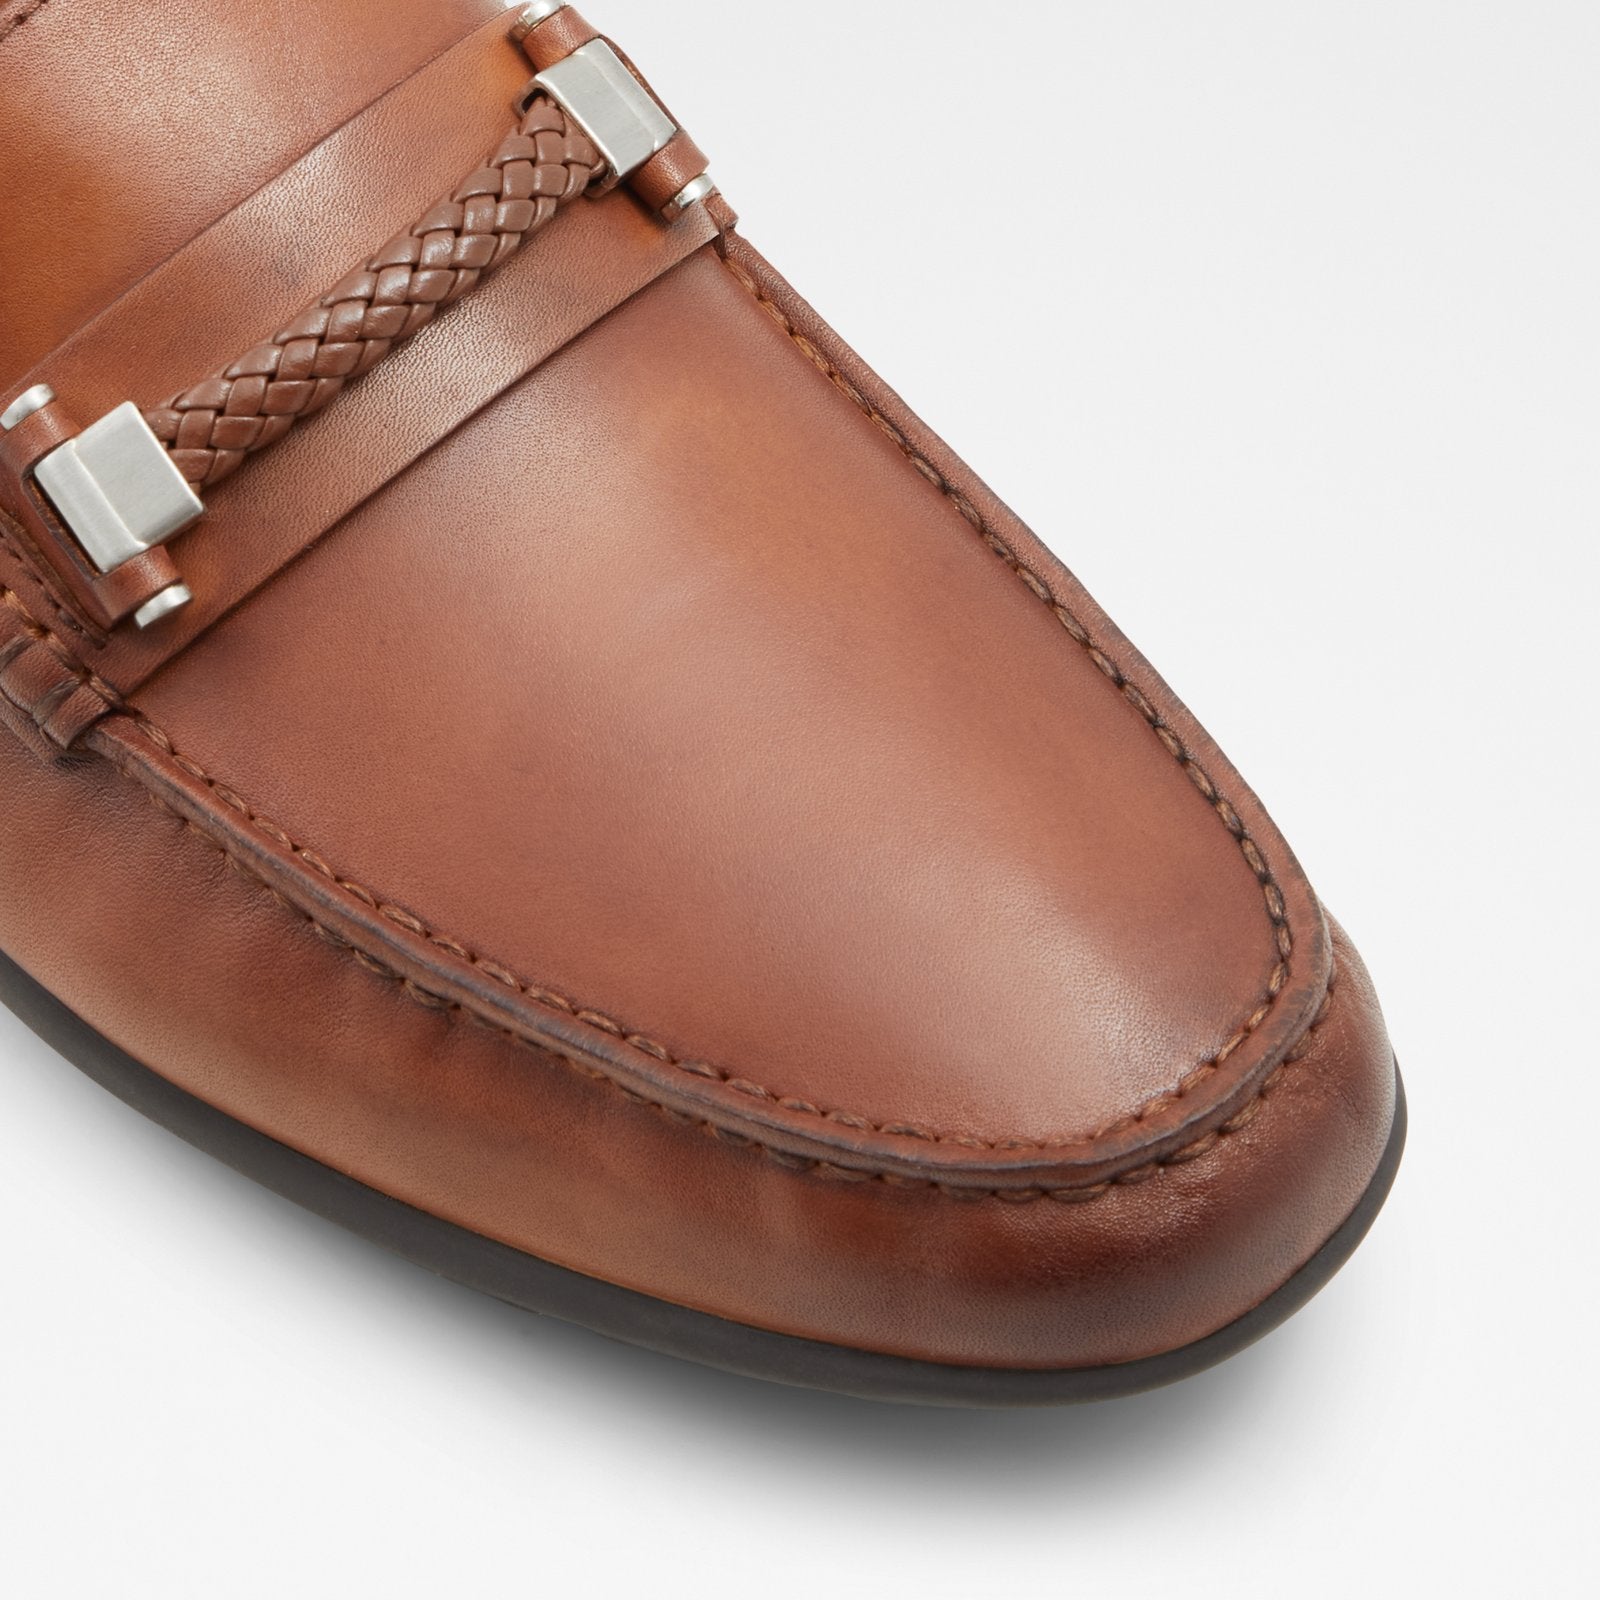 Zirnuflex Men Shoes - Cognac - ALDO KSA